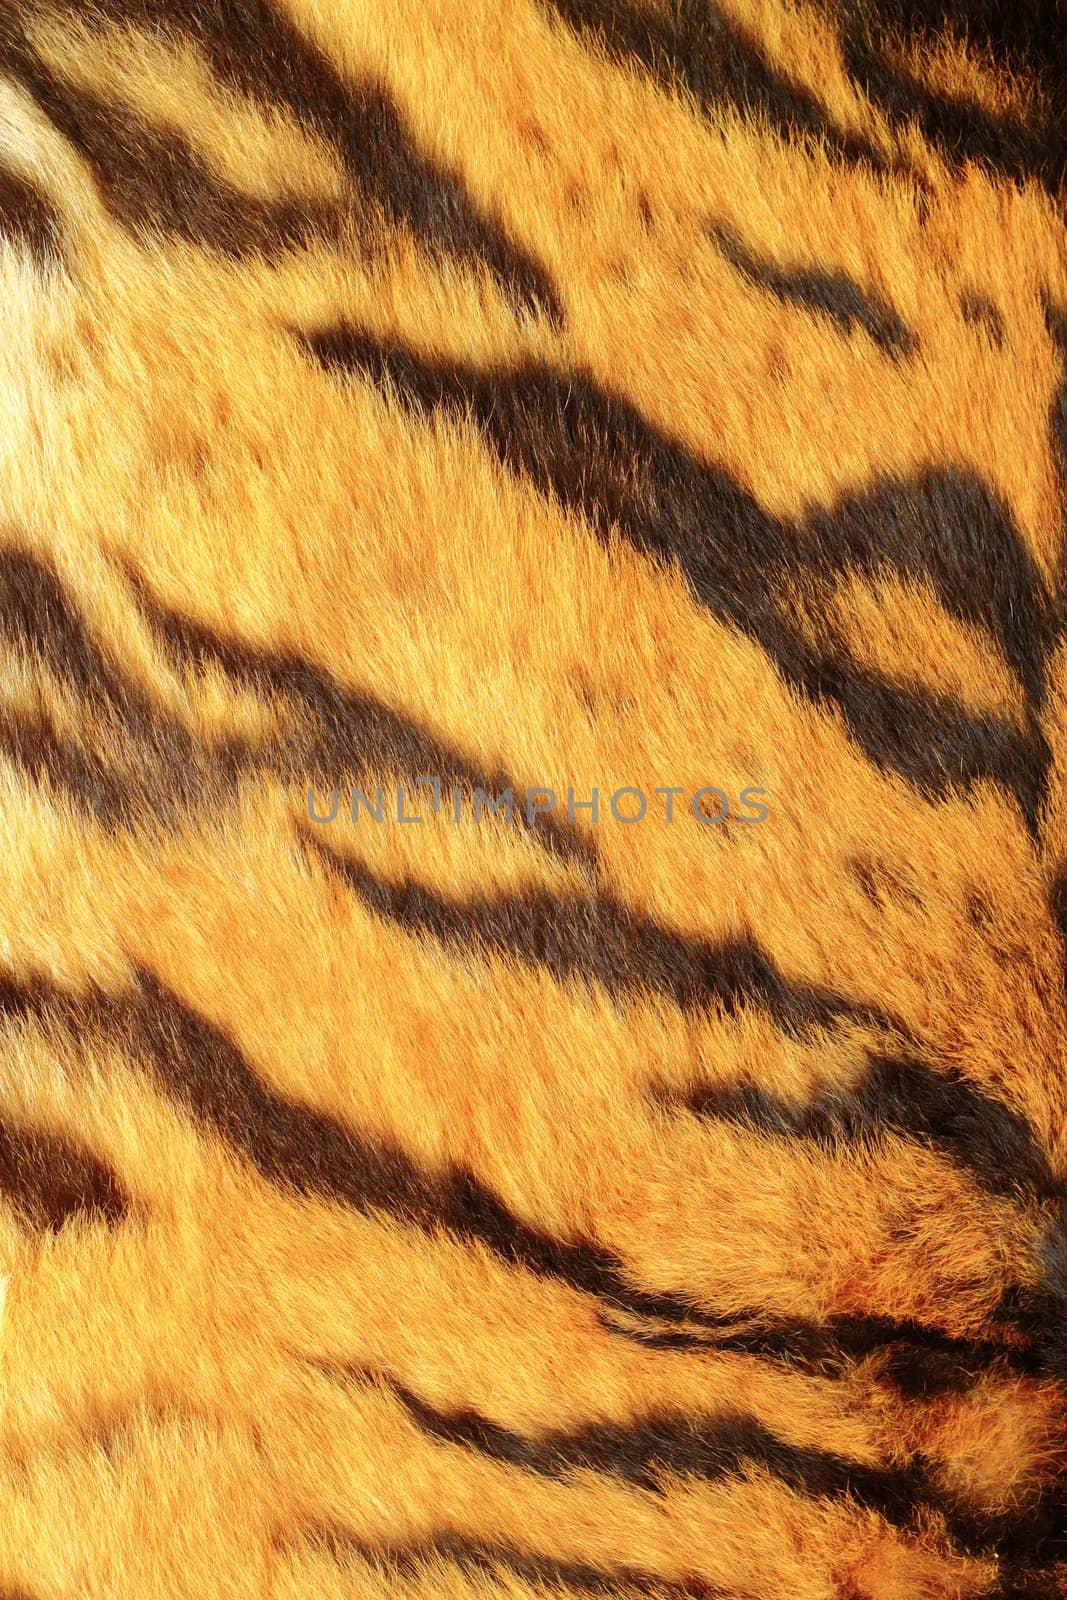 colorful fur of a tiger - detail of black stripes